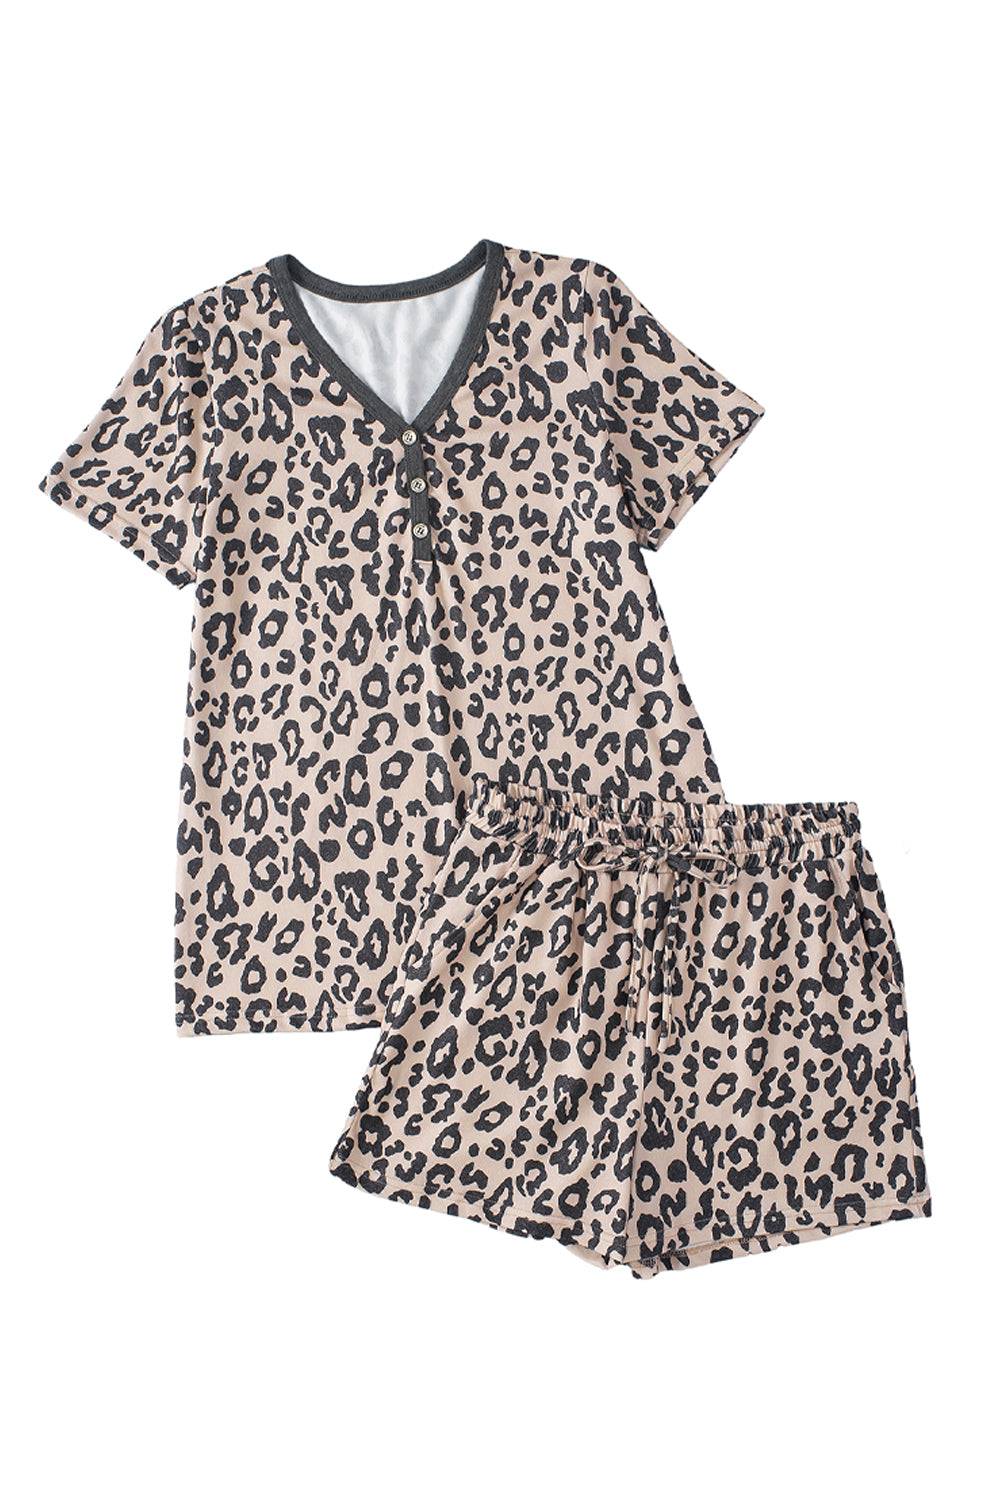 a women's pajamas set with a leopard print